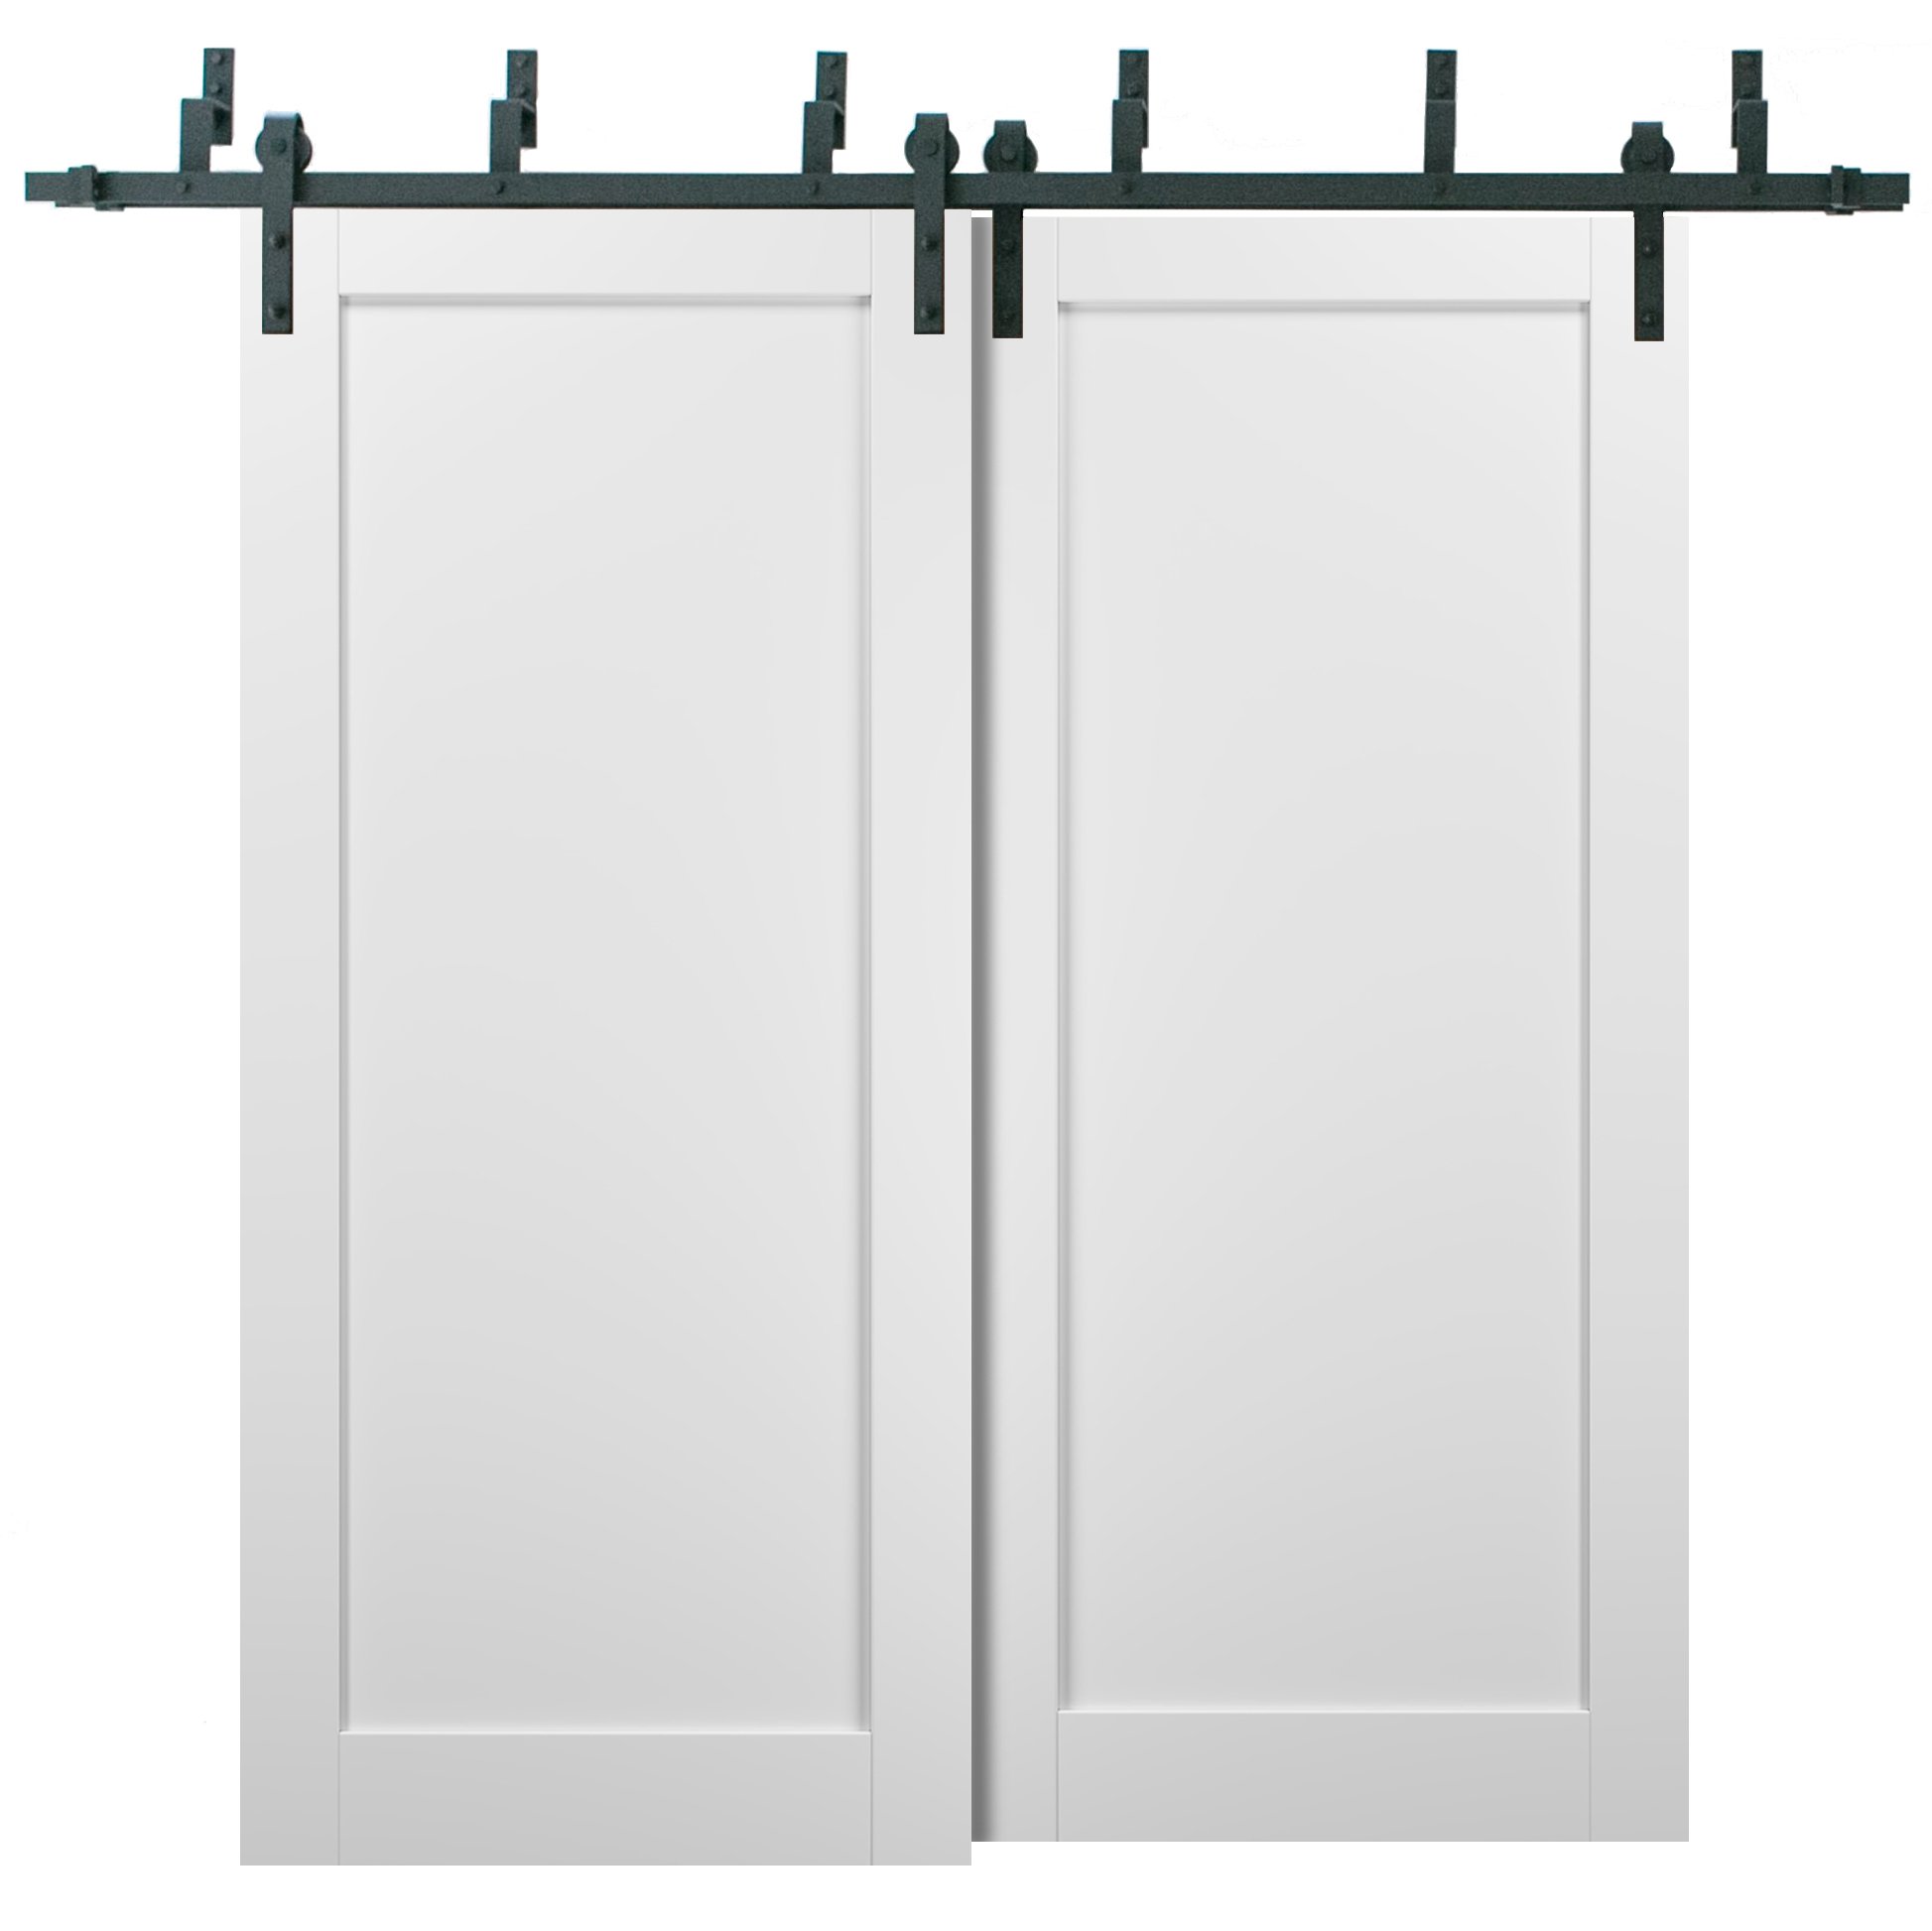 Barn Bypass Doors with 6.6ft Hardware | Quadro 4111 White Silk | Sturdy Heavy Duty Rails Kit Steel Set | Double Sliding Panel Door